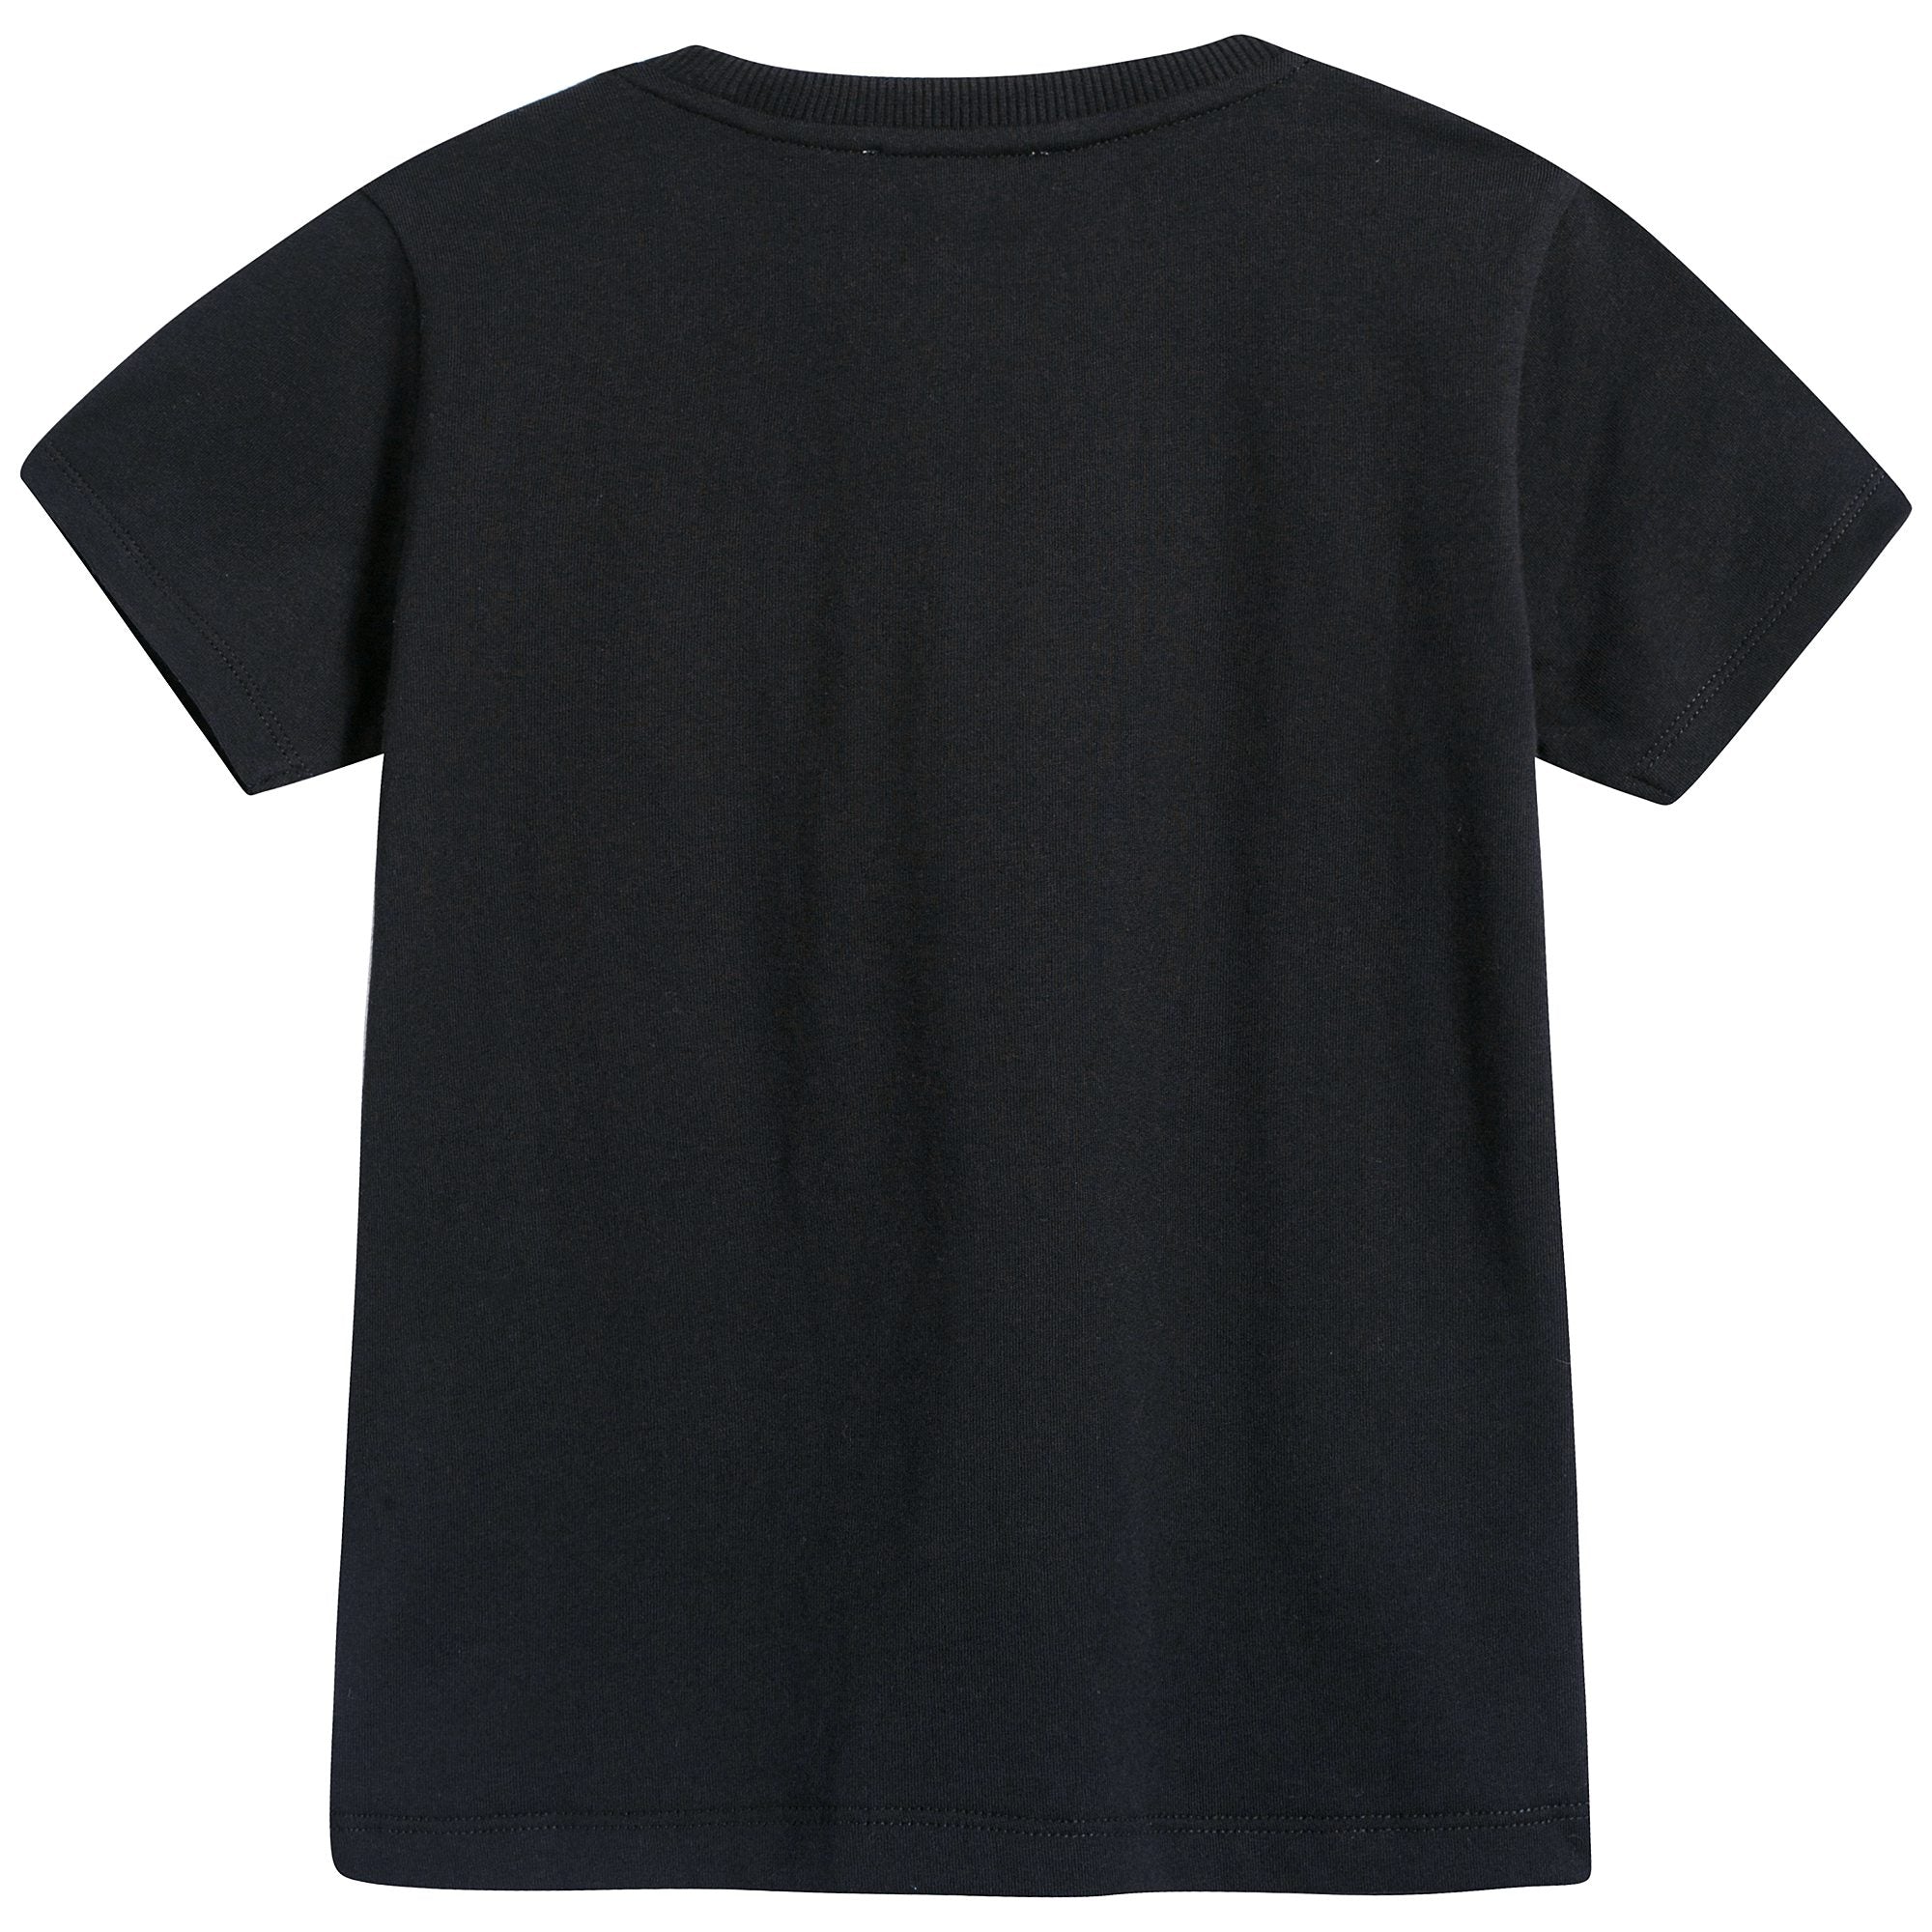 Boys Black Cotton T-shirt